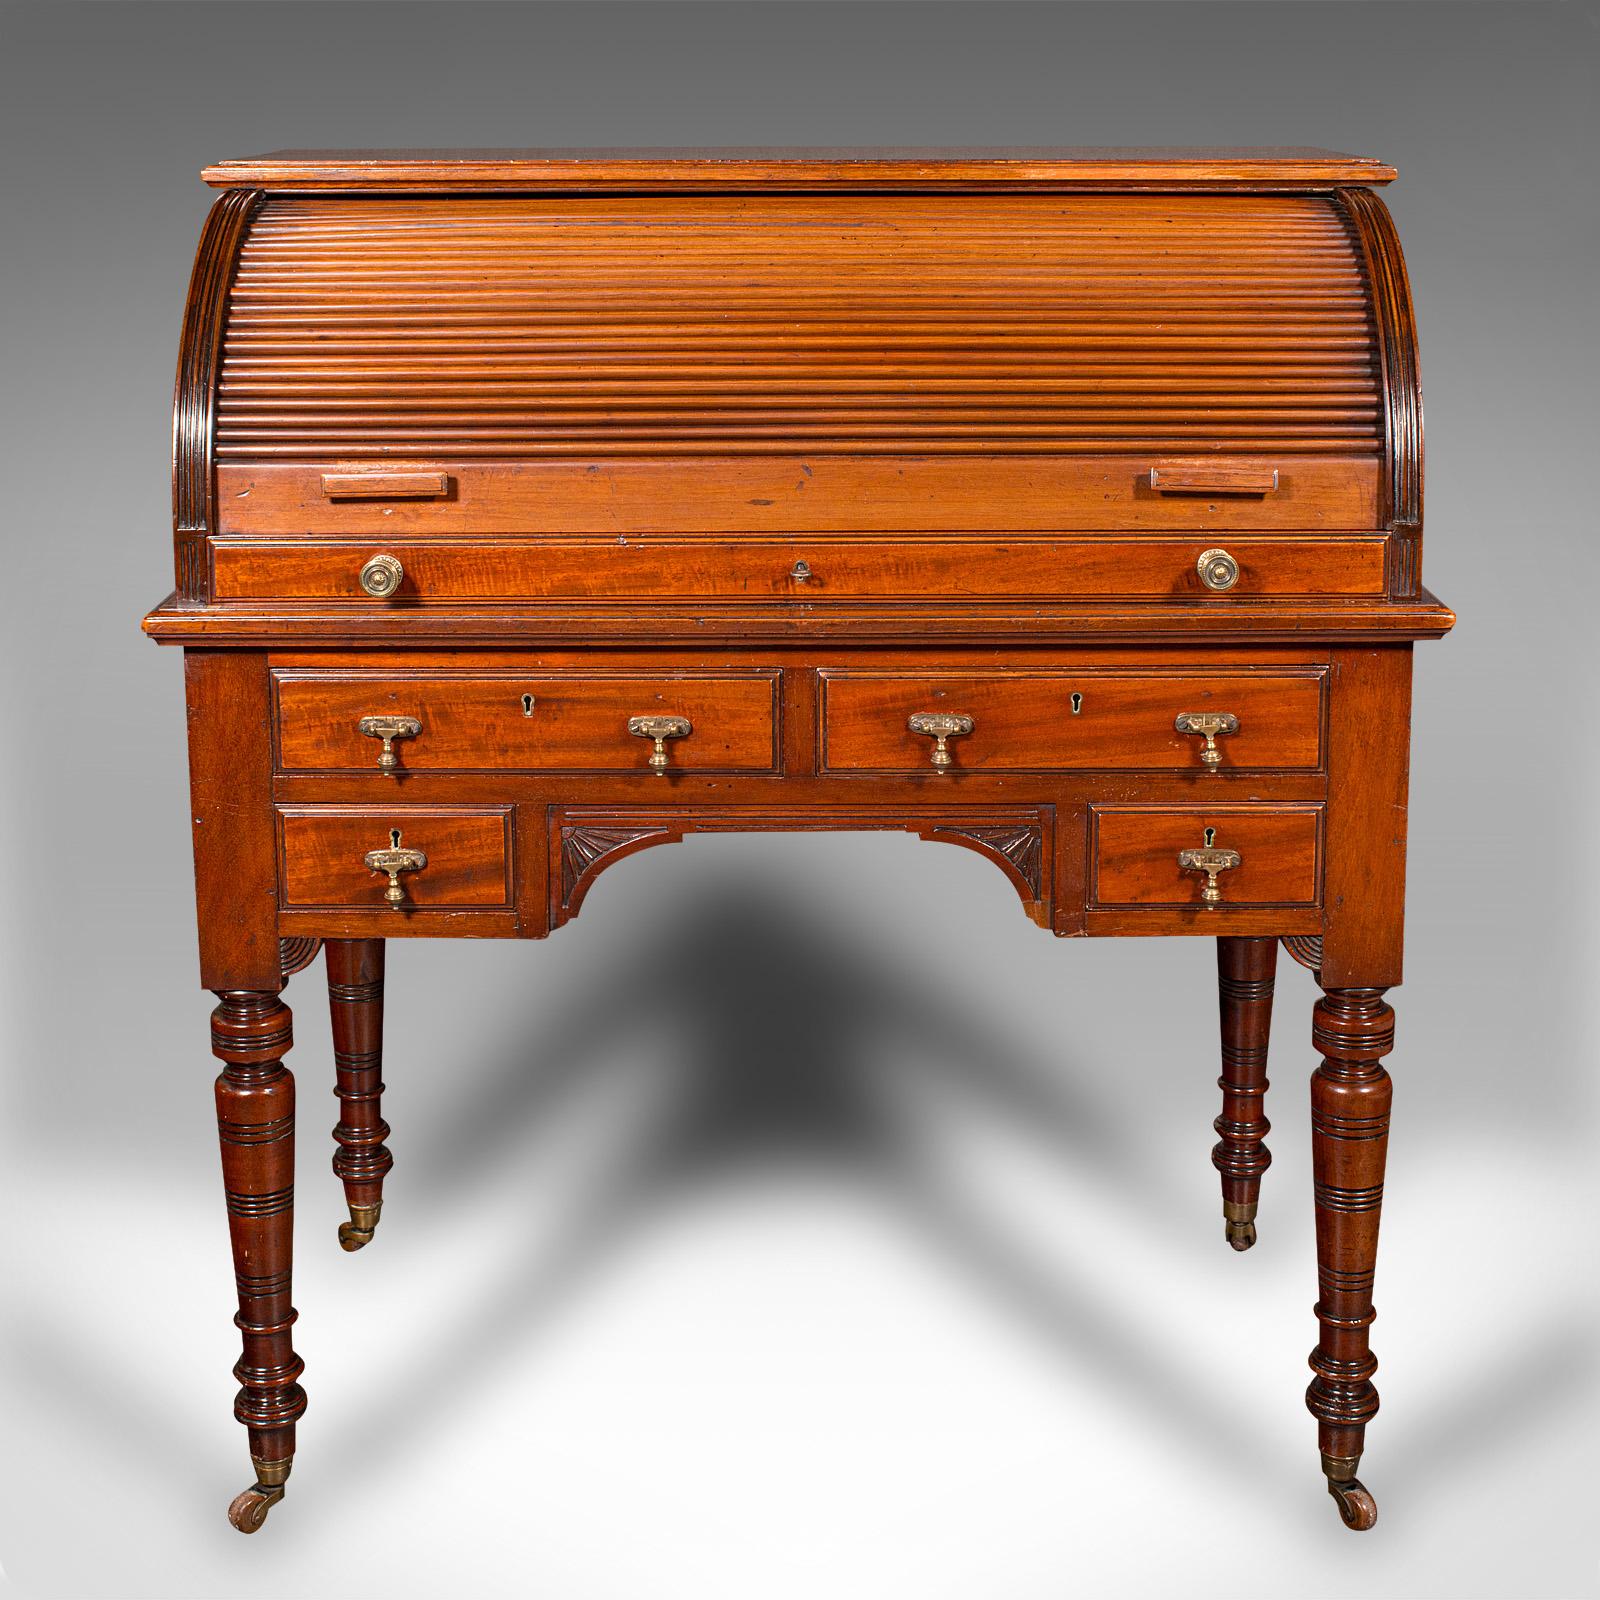 British Antique Roll-Top Desk, English, Bureau, Aesthetic Period, Victorian, Circa 1880 For Sale